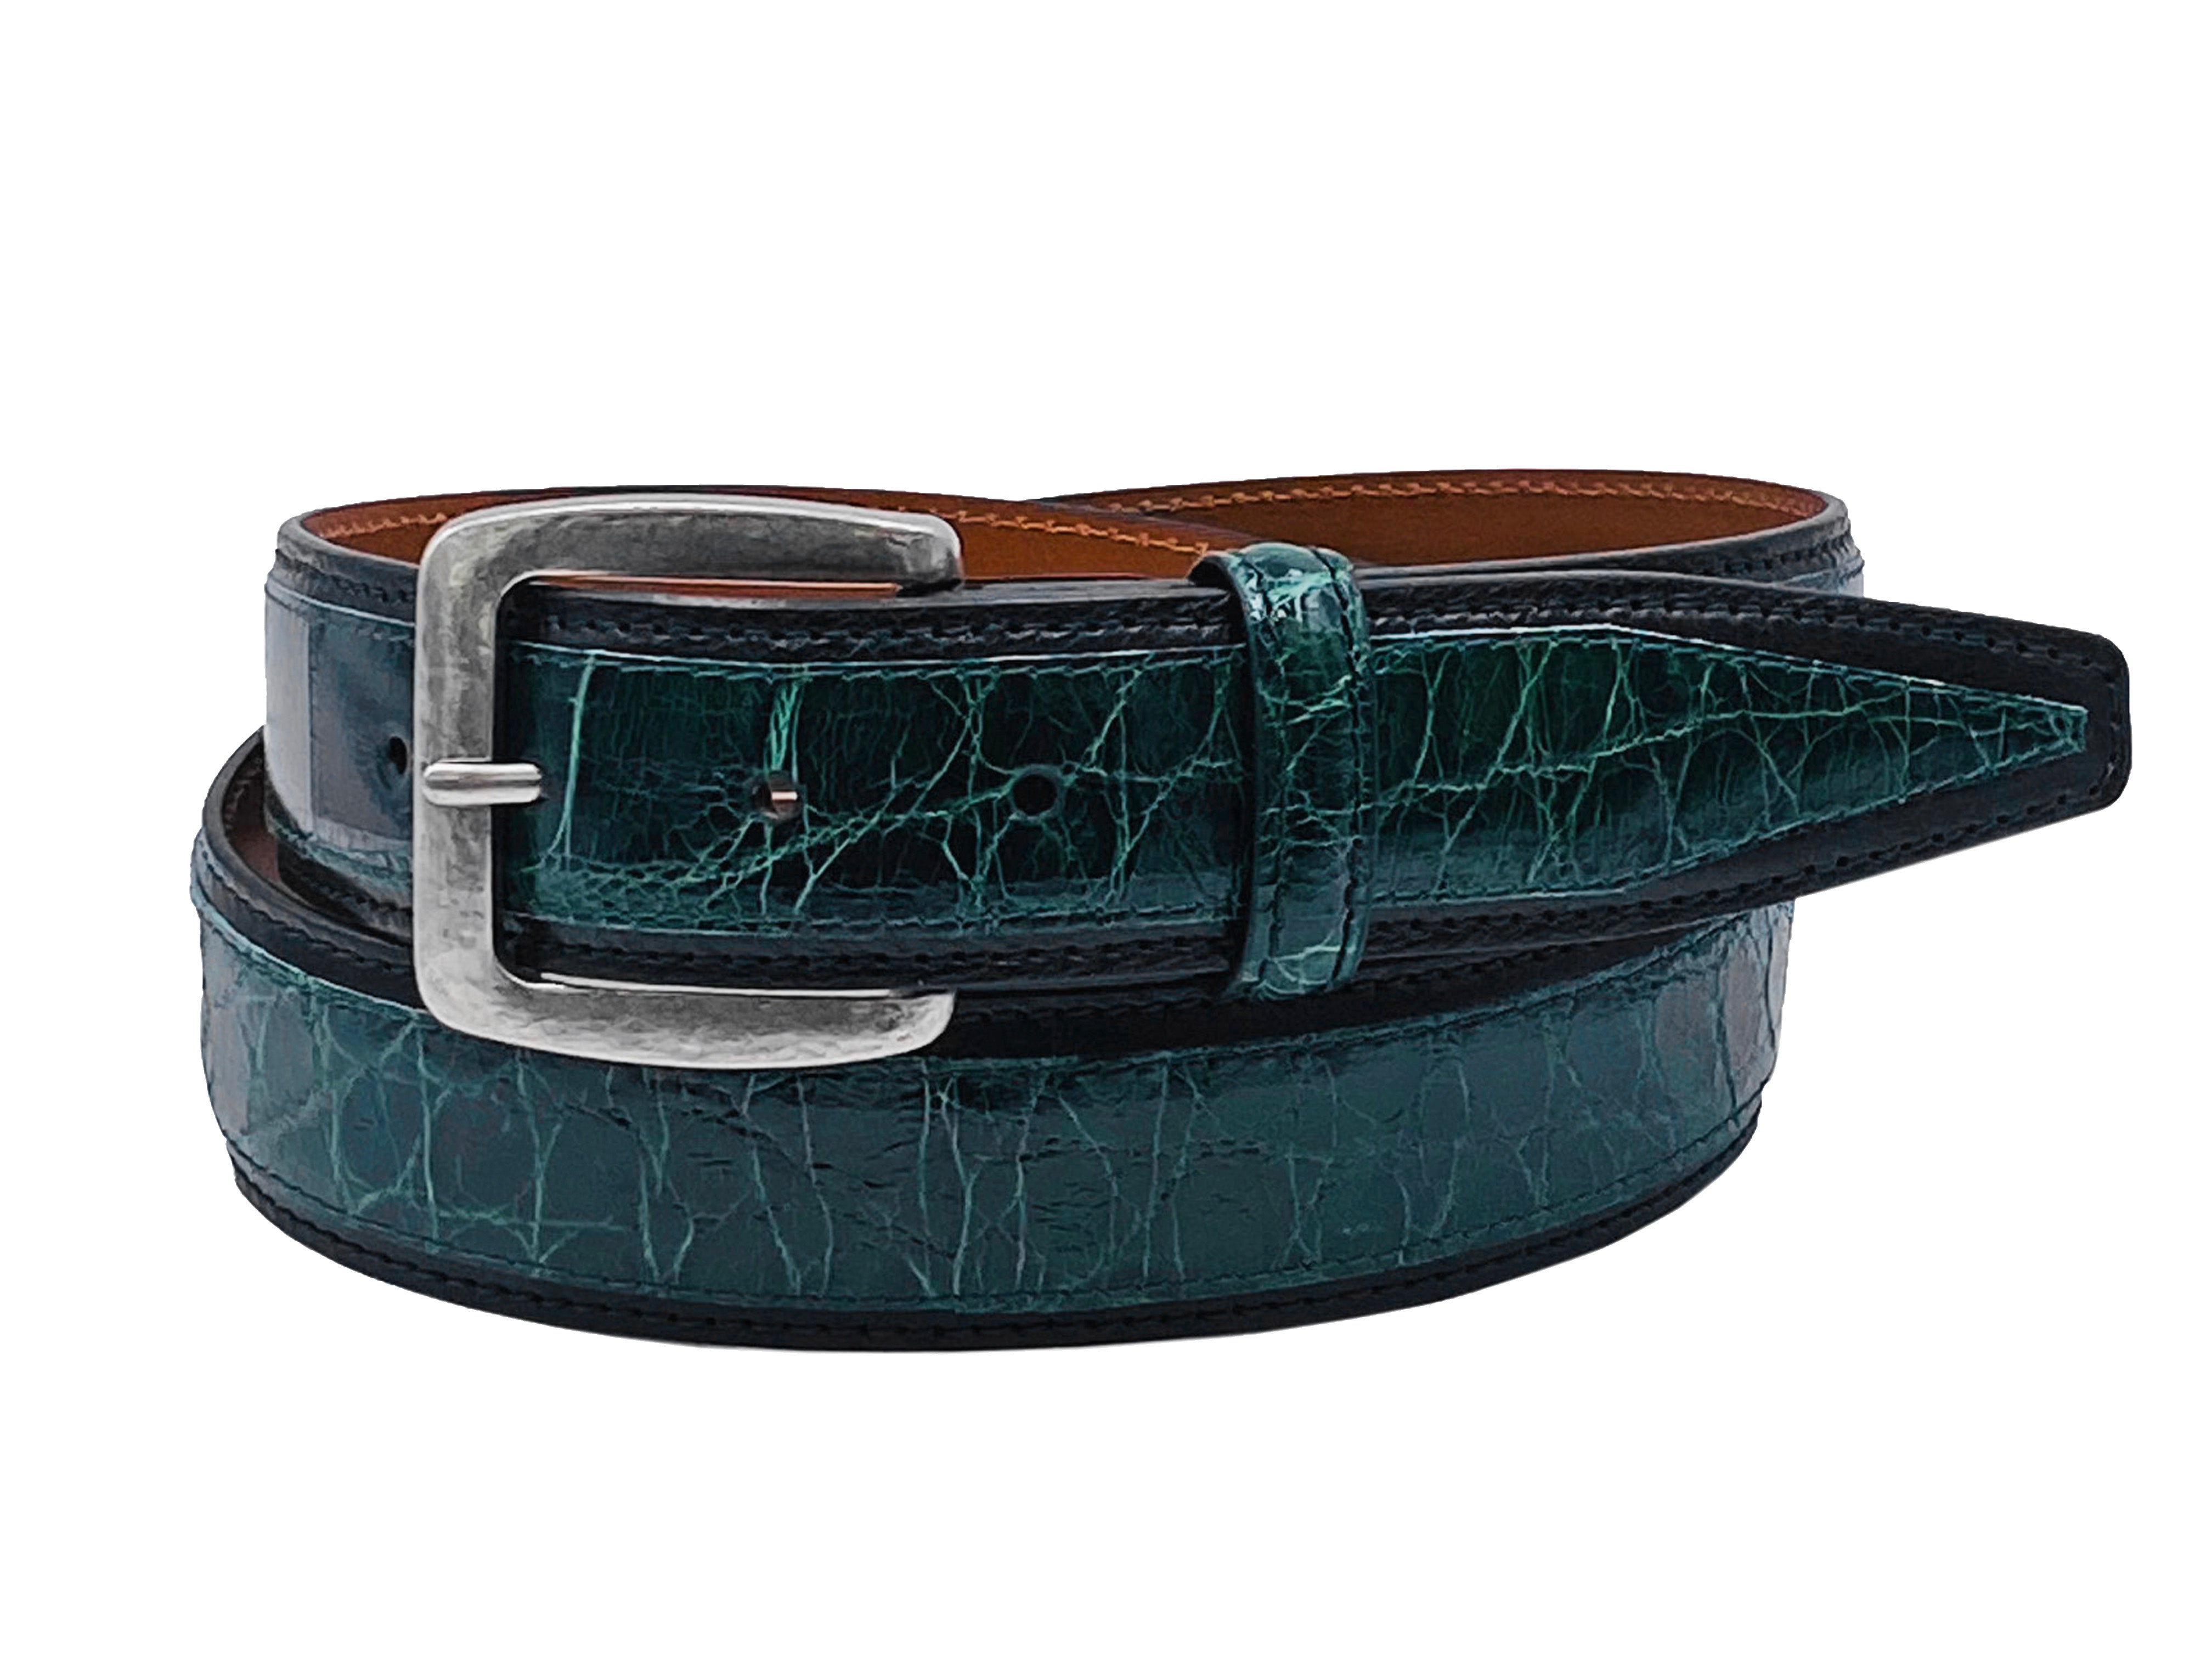 Classic Alligator Leather Belt - 35 mm